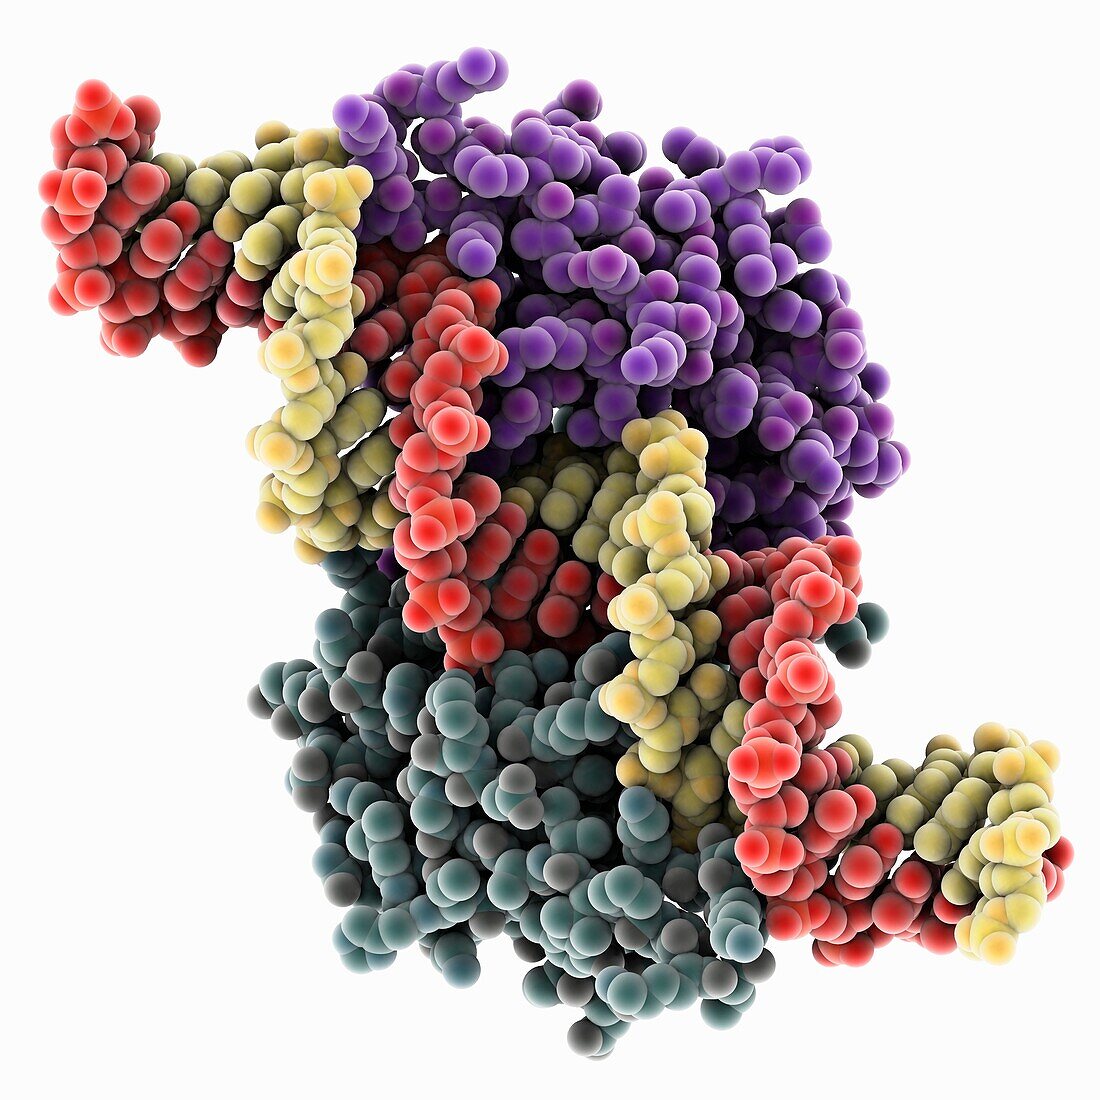 Haeme sensor protein complexed with DNA, molecular model